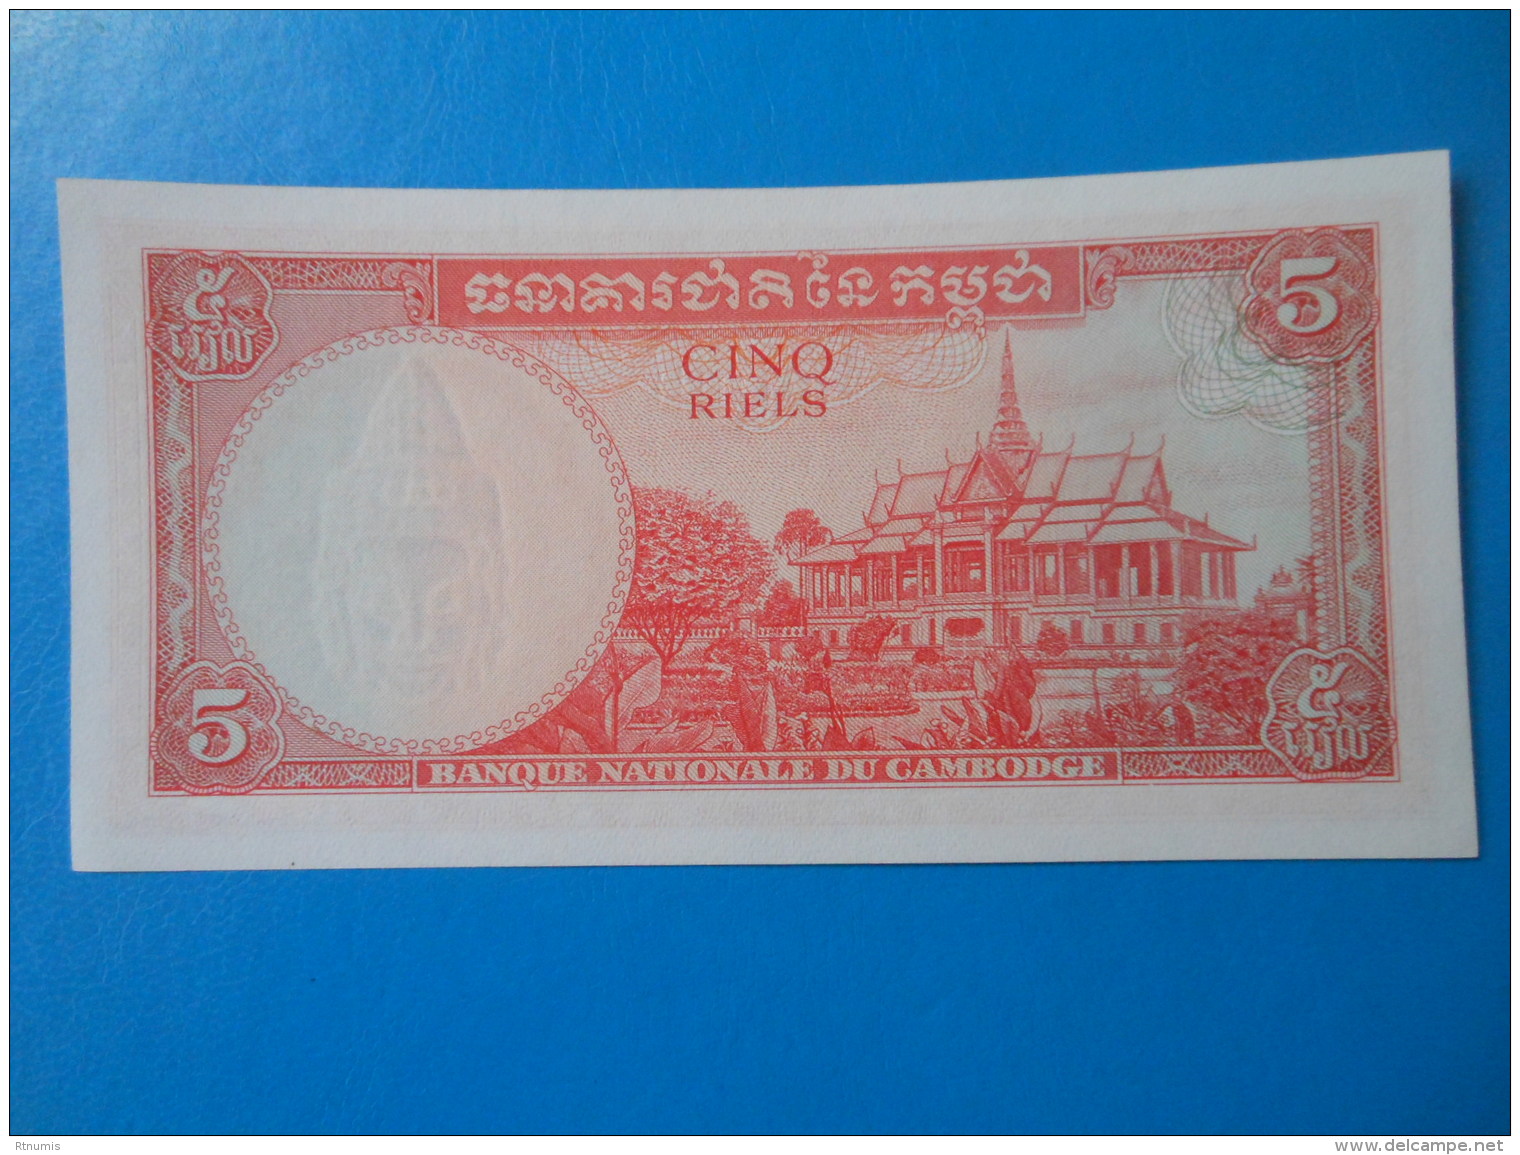 Cambodge Cambodia 5 Riels 1972 P10c UNC - Cambodia